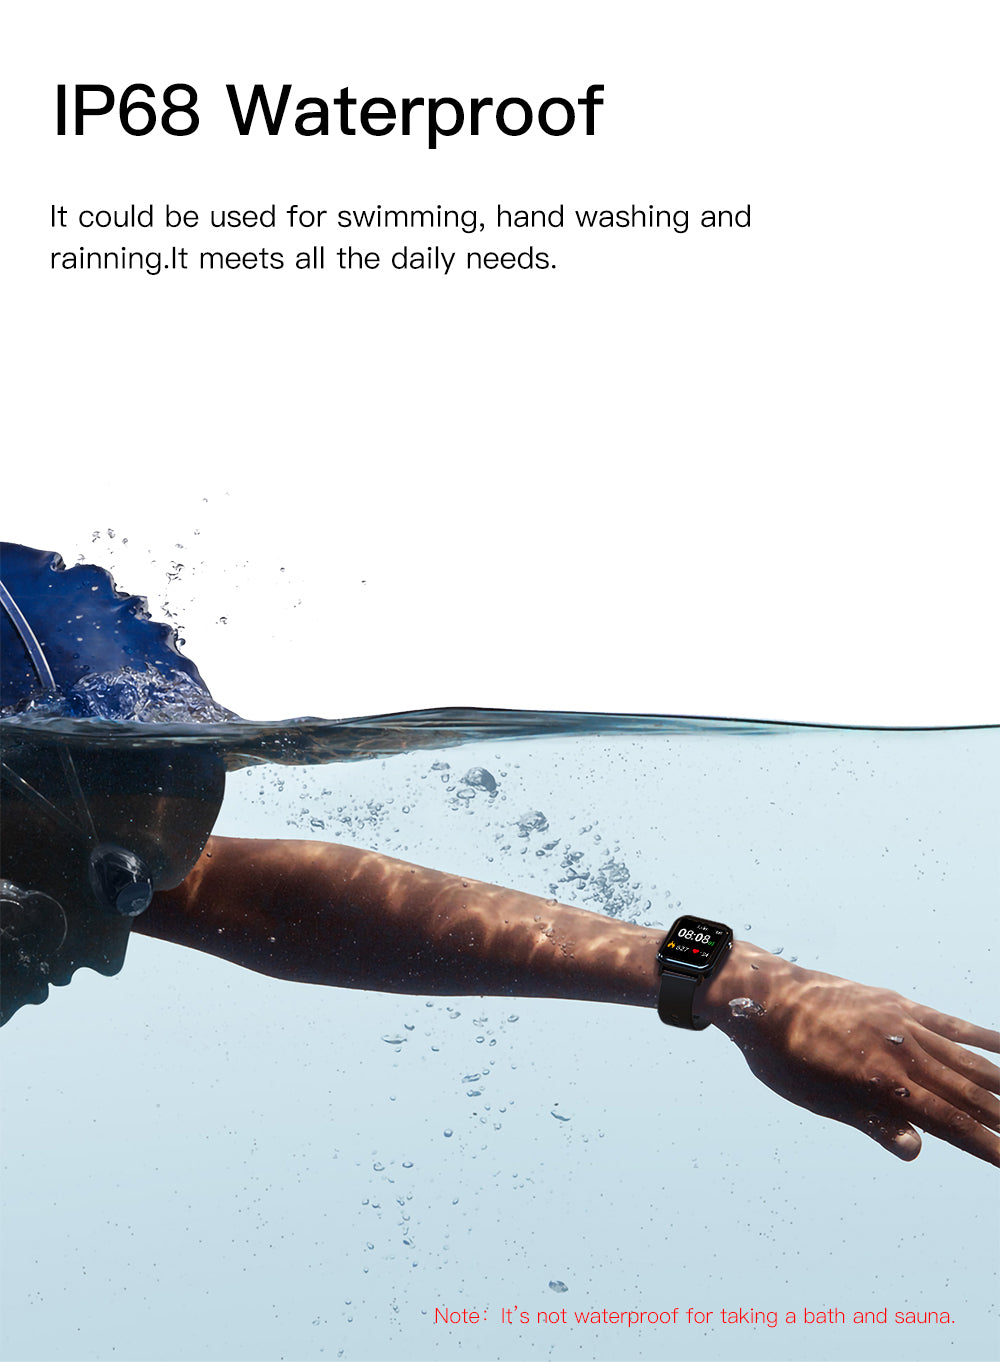 KOSPET GTO Smartwatch IP68 Waterproof support swmming